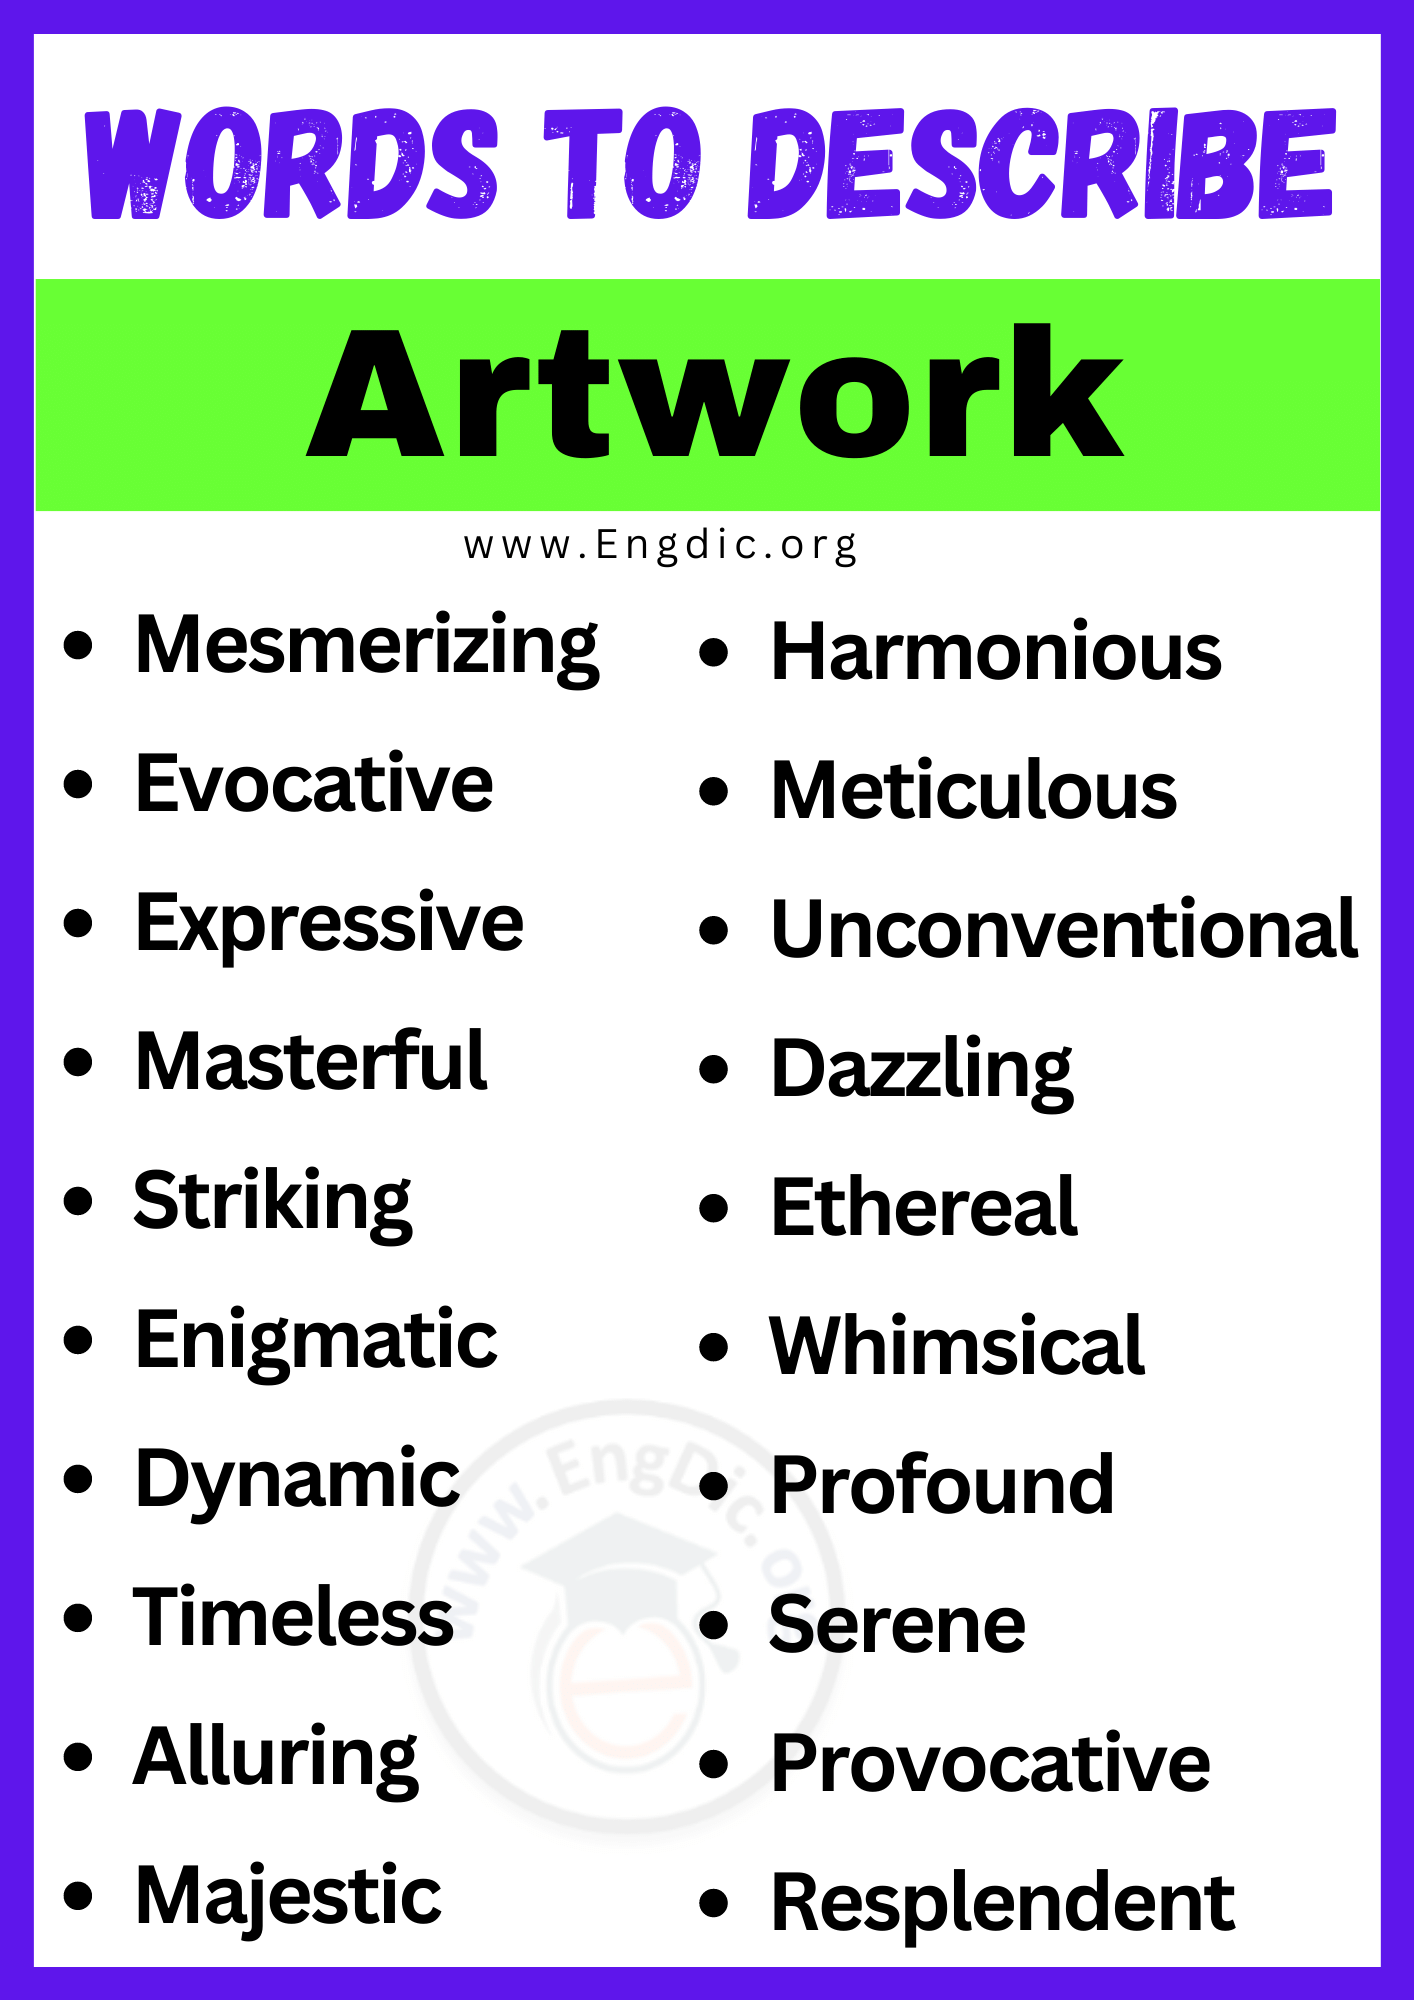 Words to Describe Artwork